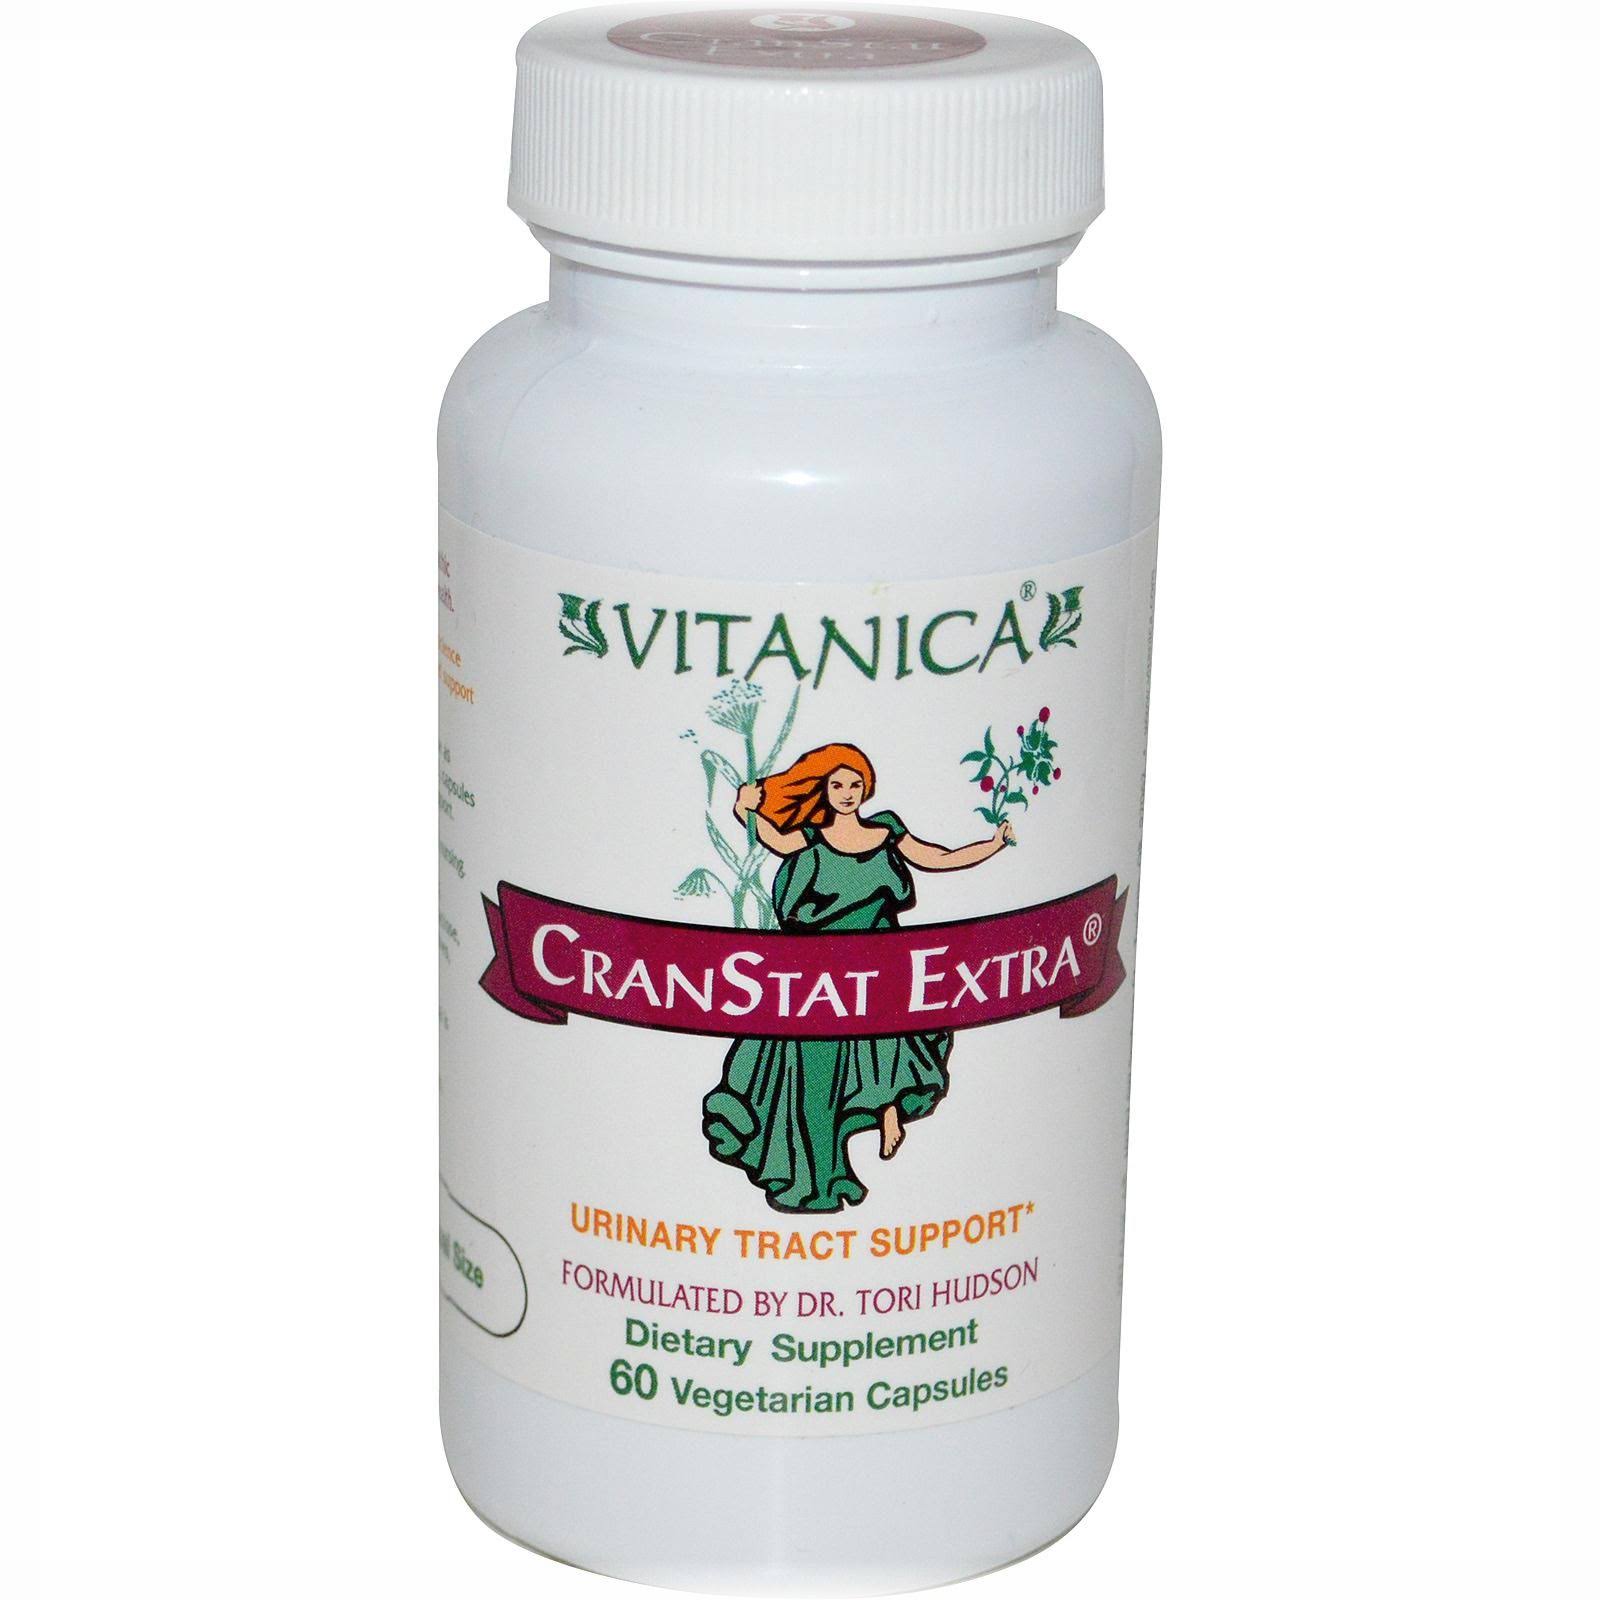 Vitanica CranStat Extra Urinary Tract Support Supplement - 60ct